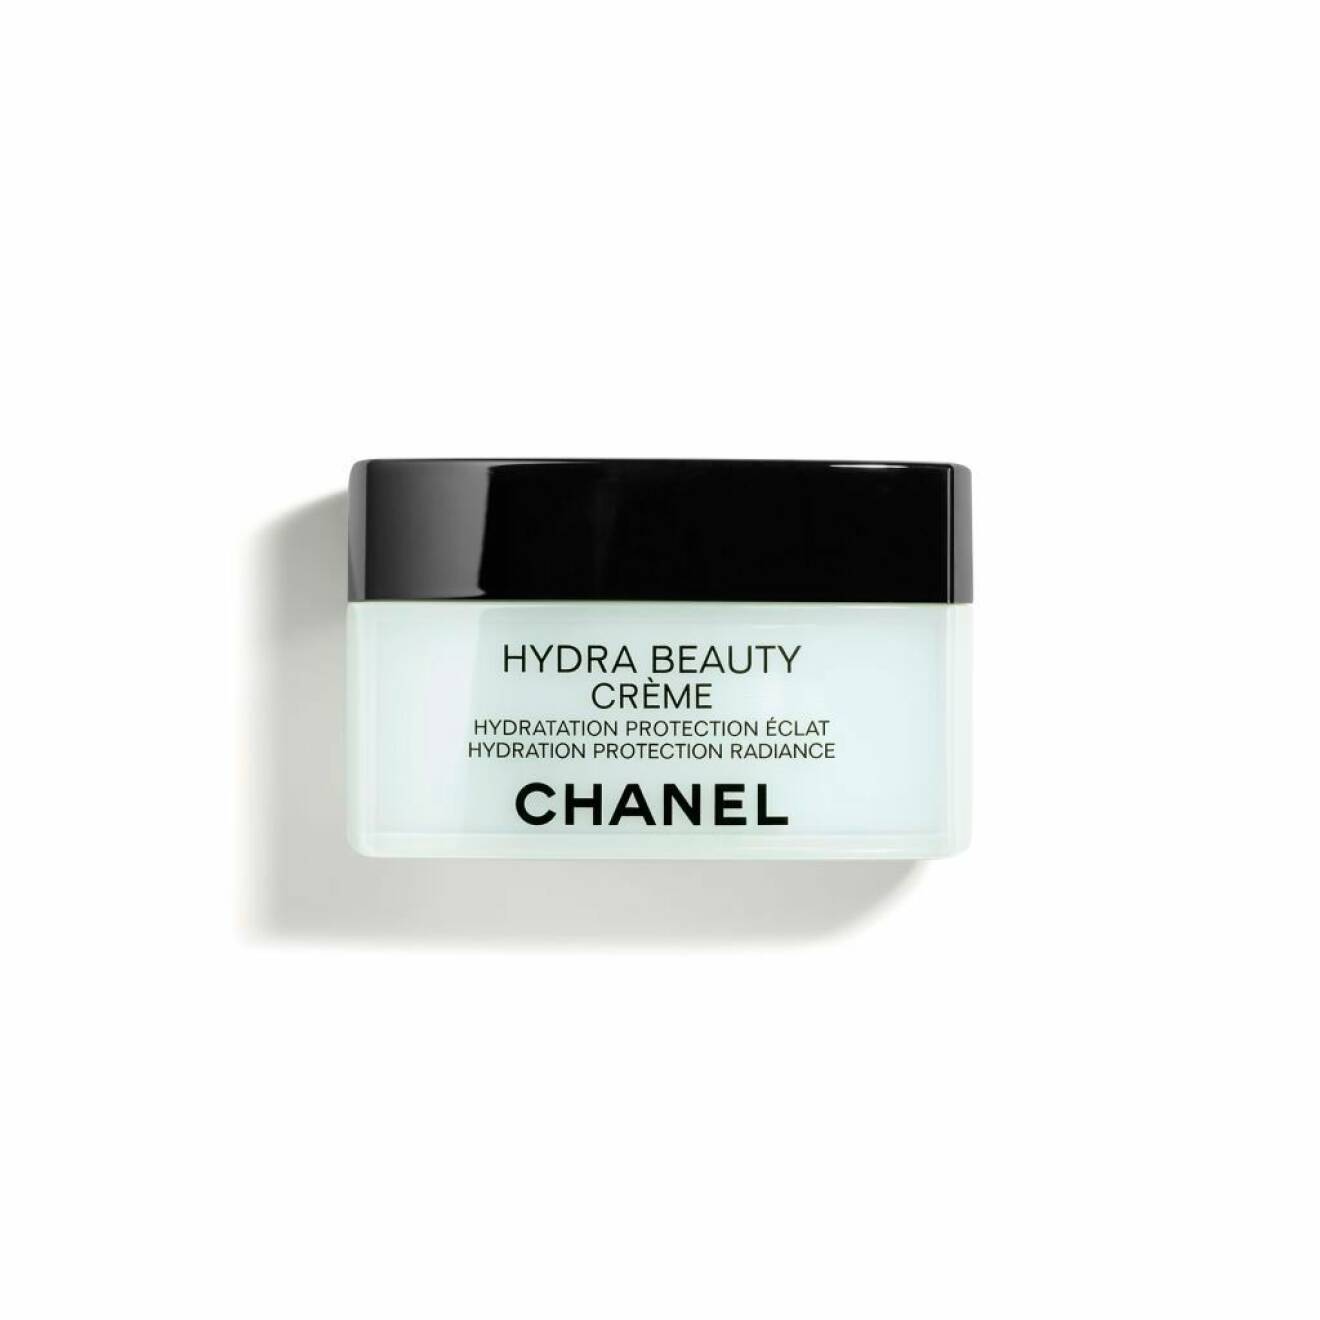 hydra beauty crème från Chanel.